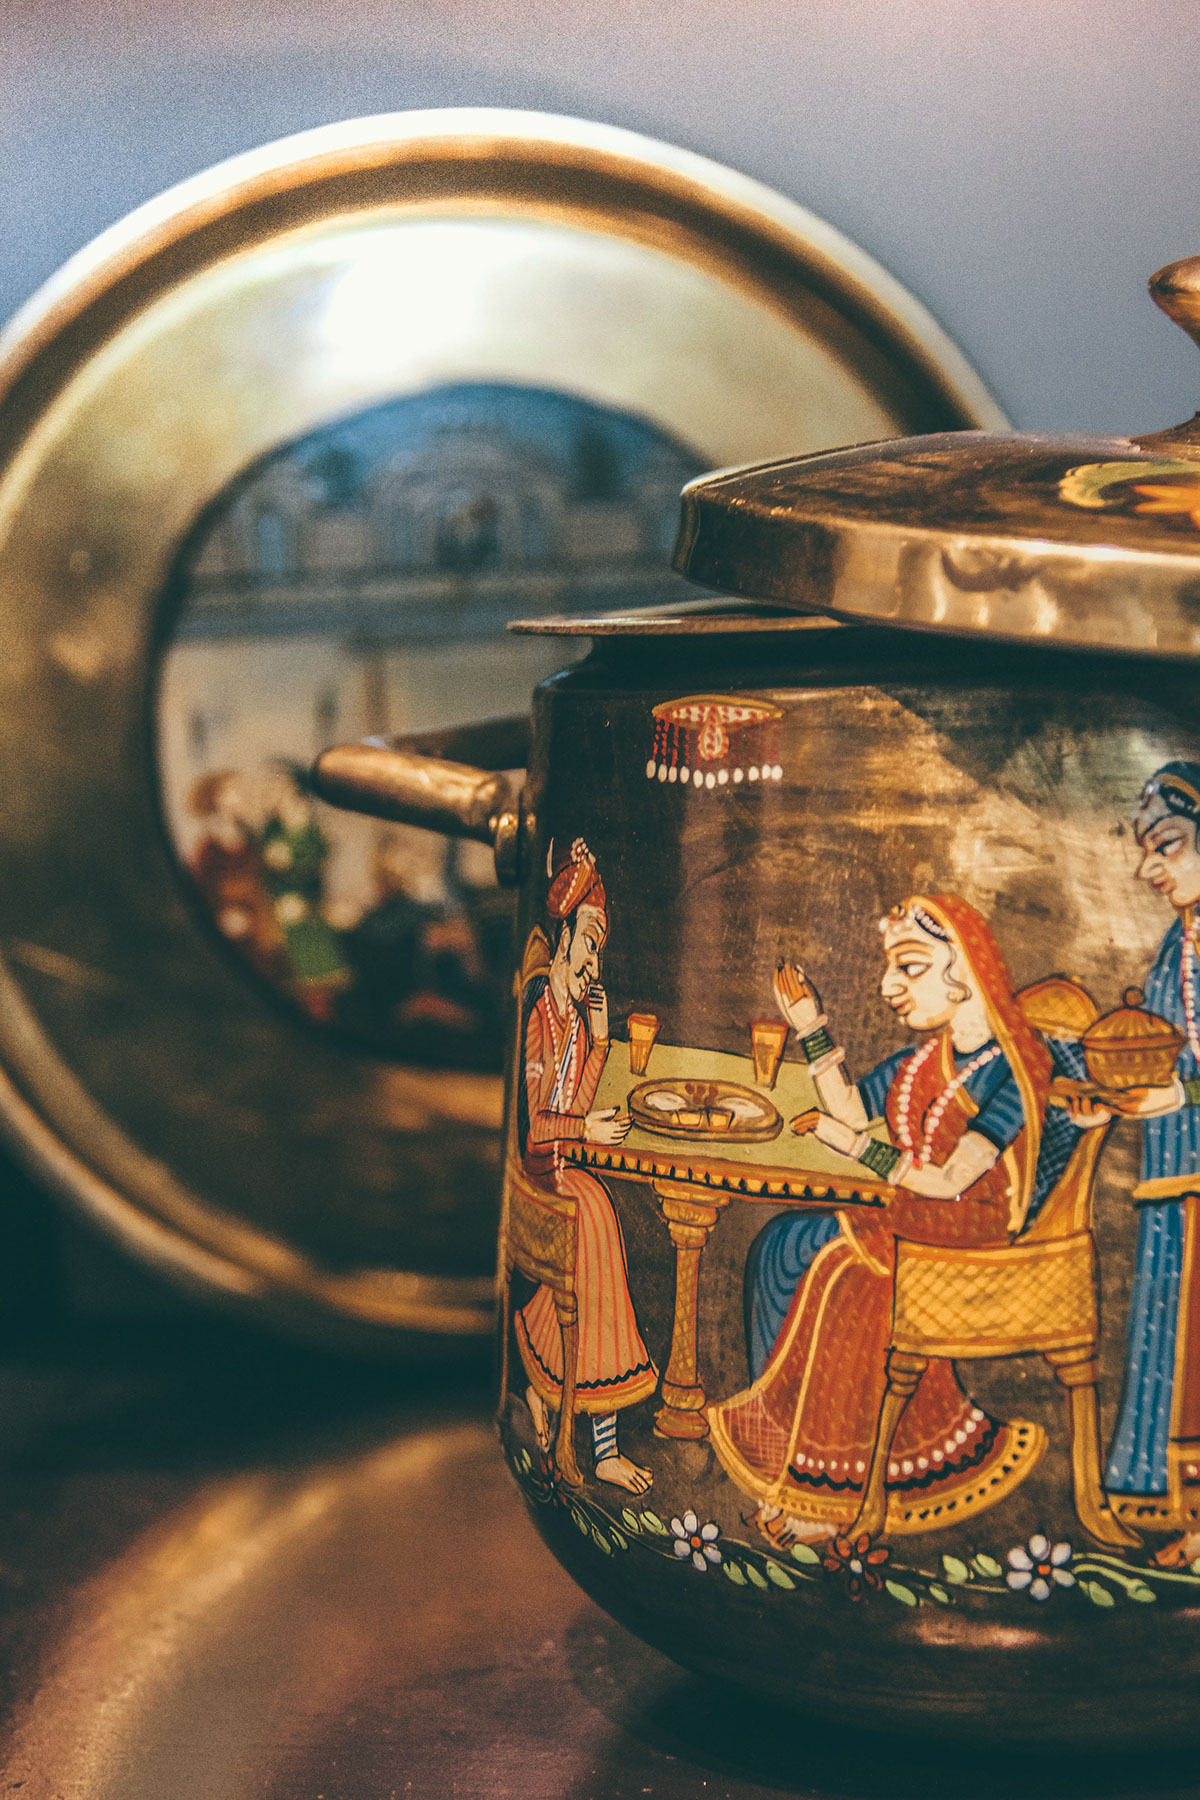 Indian Kitchen traditional utensils Metalware Crafts research ornamentation reintroduce copper brass Handpaint